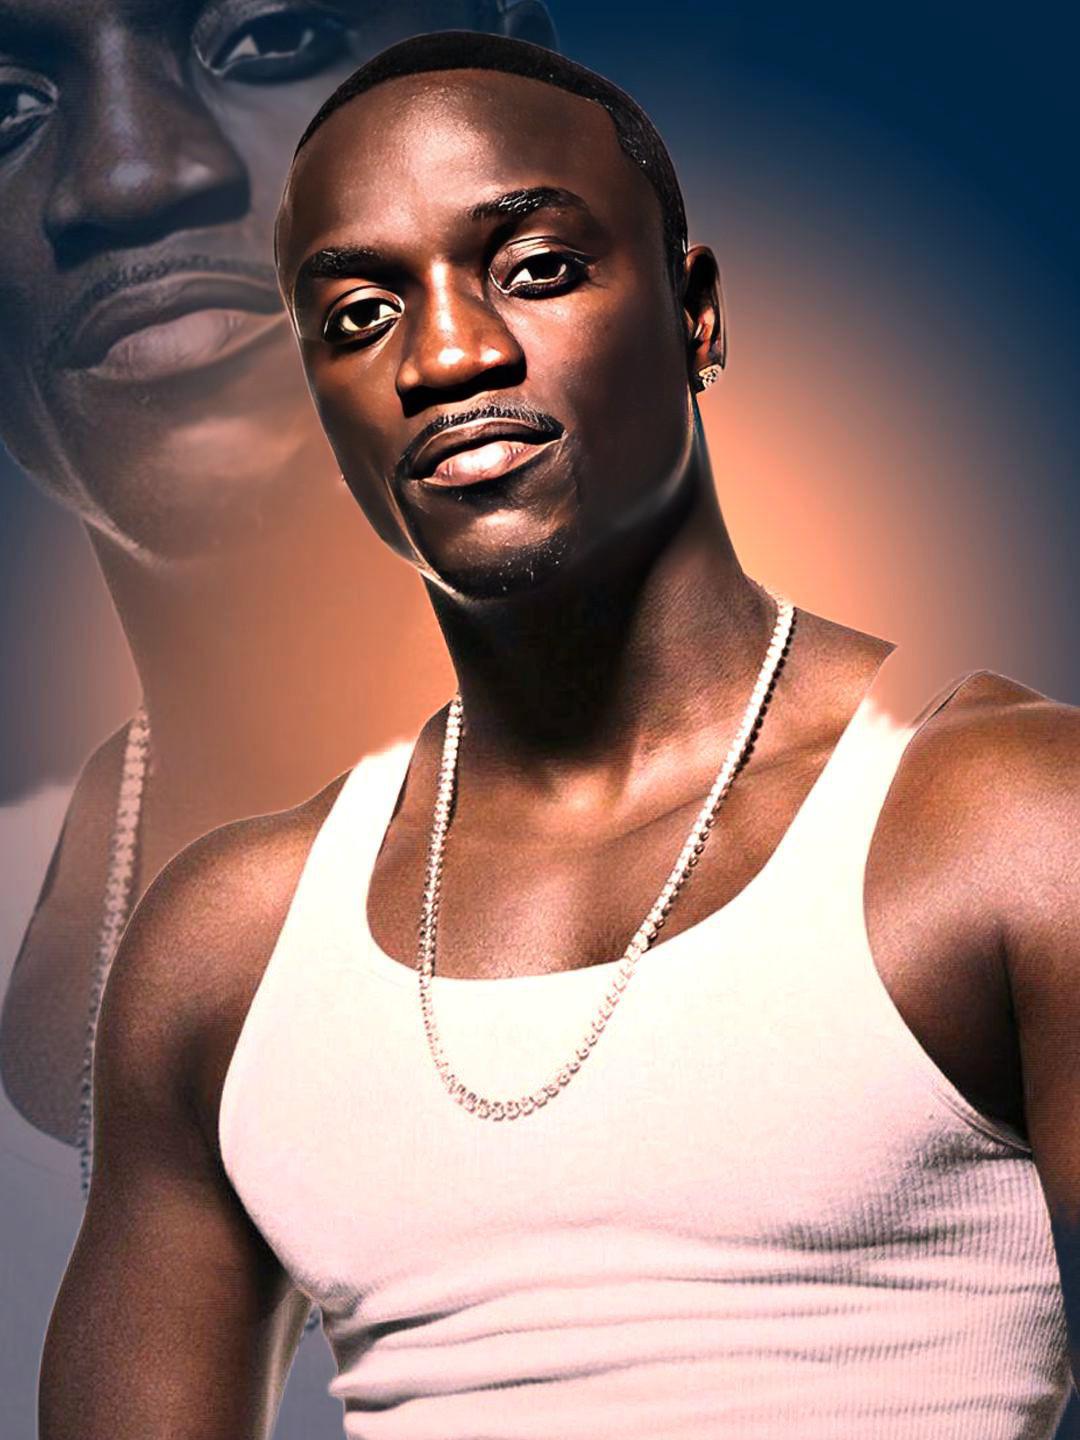 Amateur Teen Foursome - Aliaune Damala Badara Akon Thiam - Celeb ART - Beautiful Artworks of  Celebrities, Footballers, Politicians and Famous People in World | OpenSea